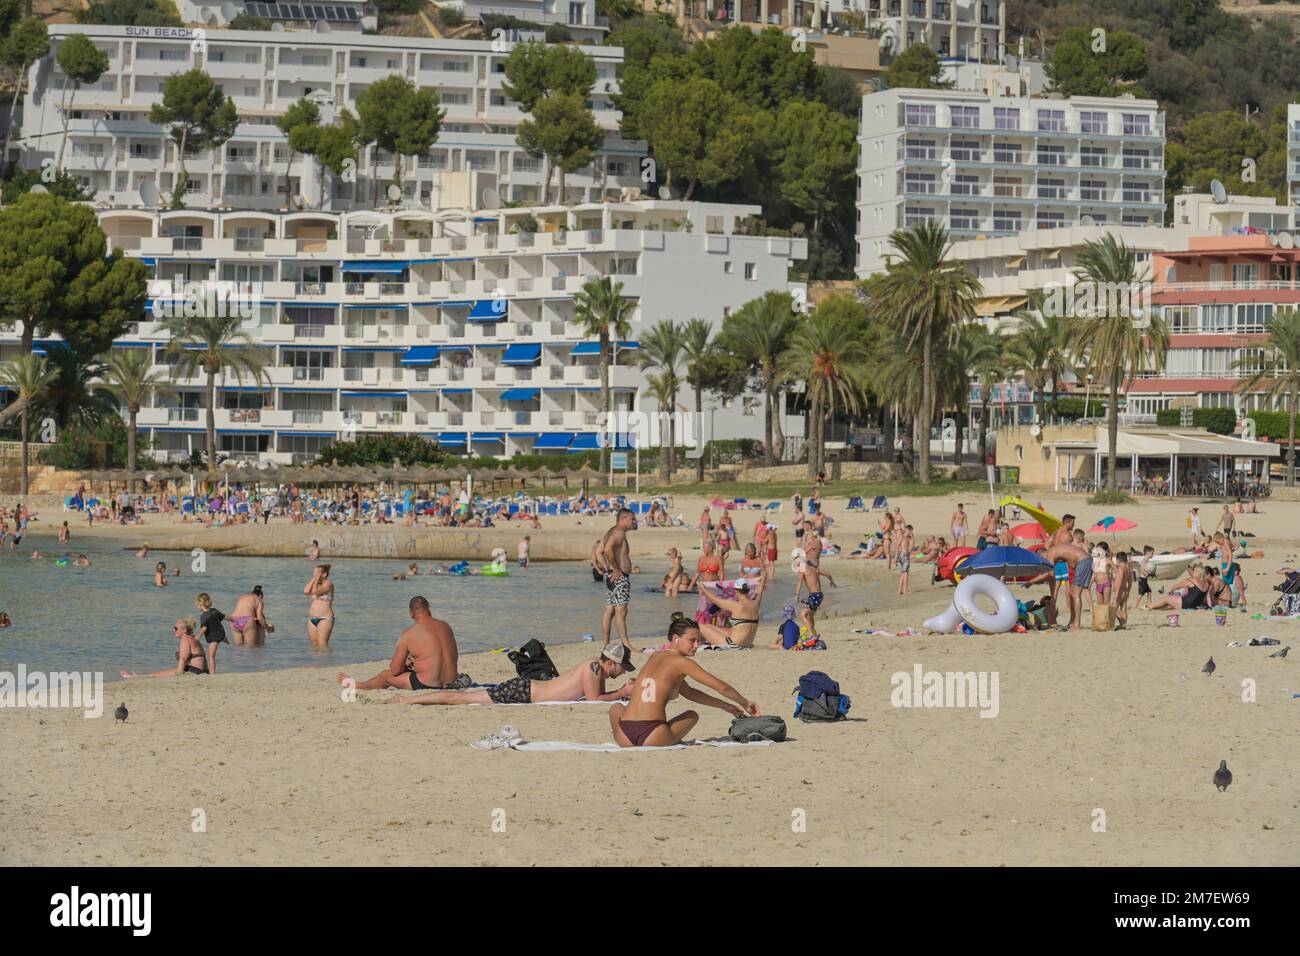 Sandstrand, Badebucht, Hotels, Santa Ponca, Mallorca, Spanien Stock Photo